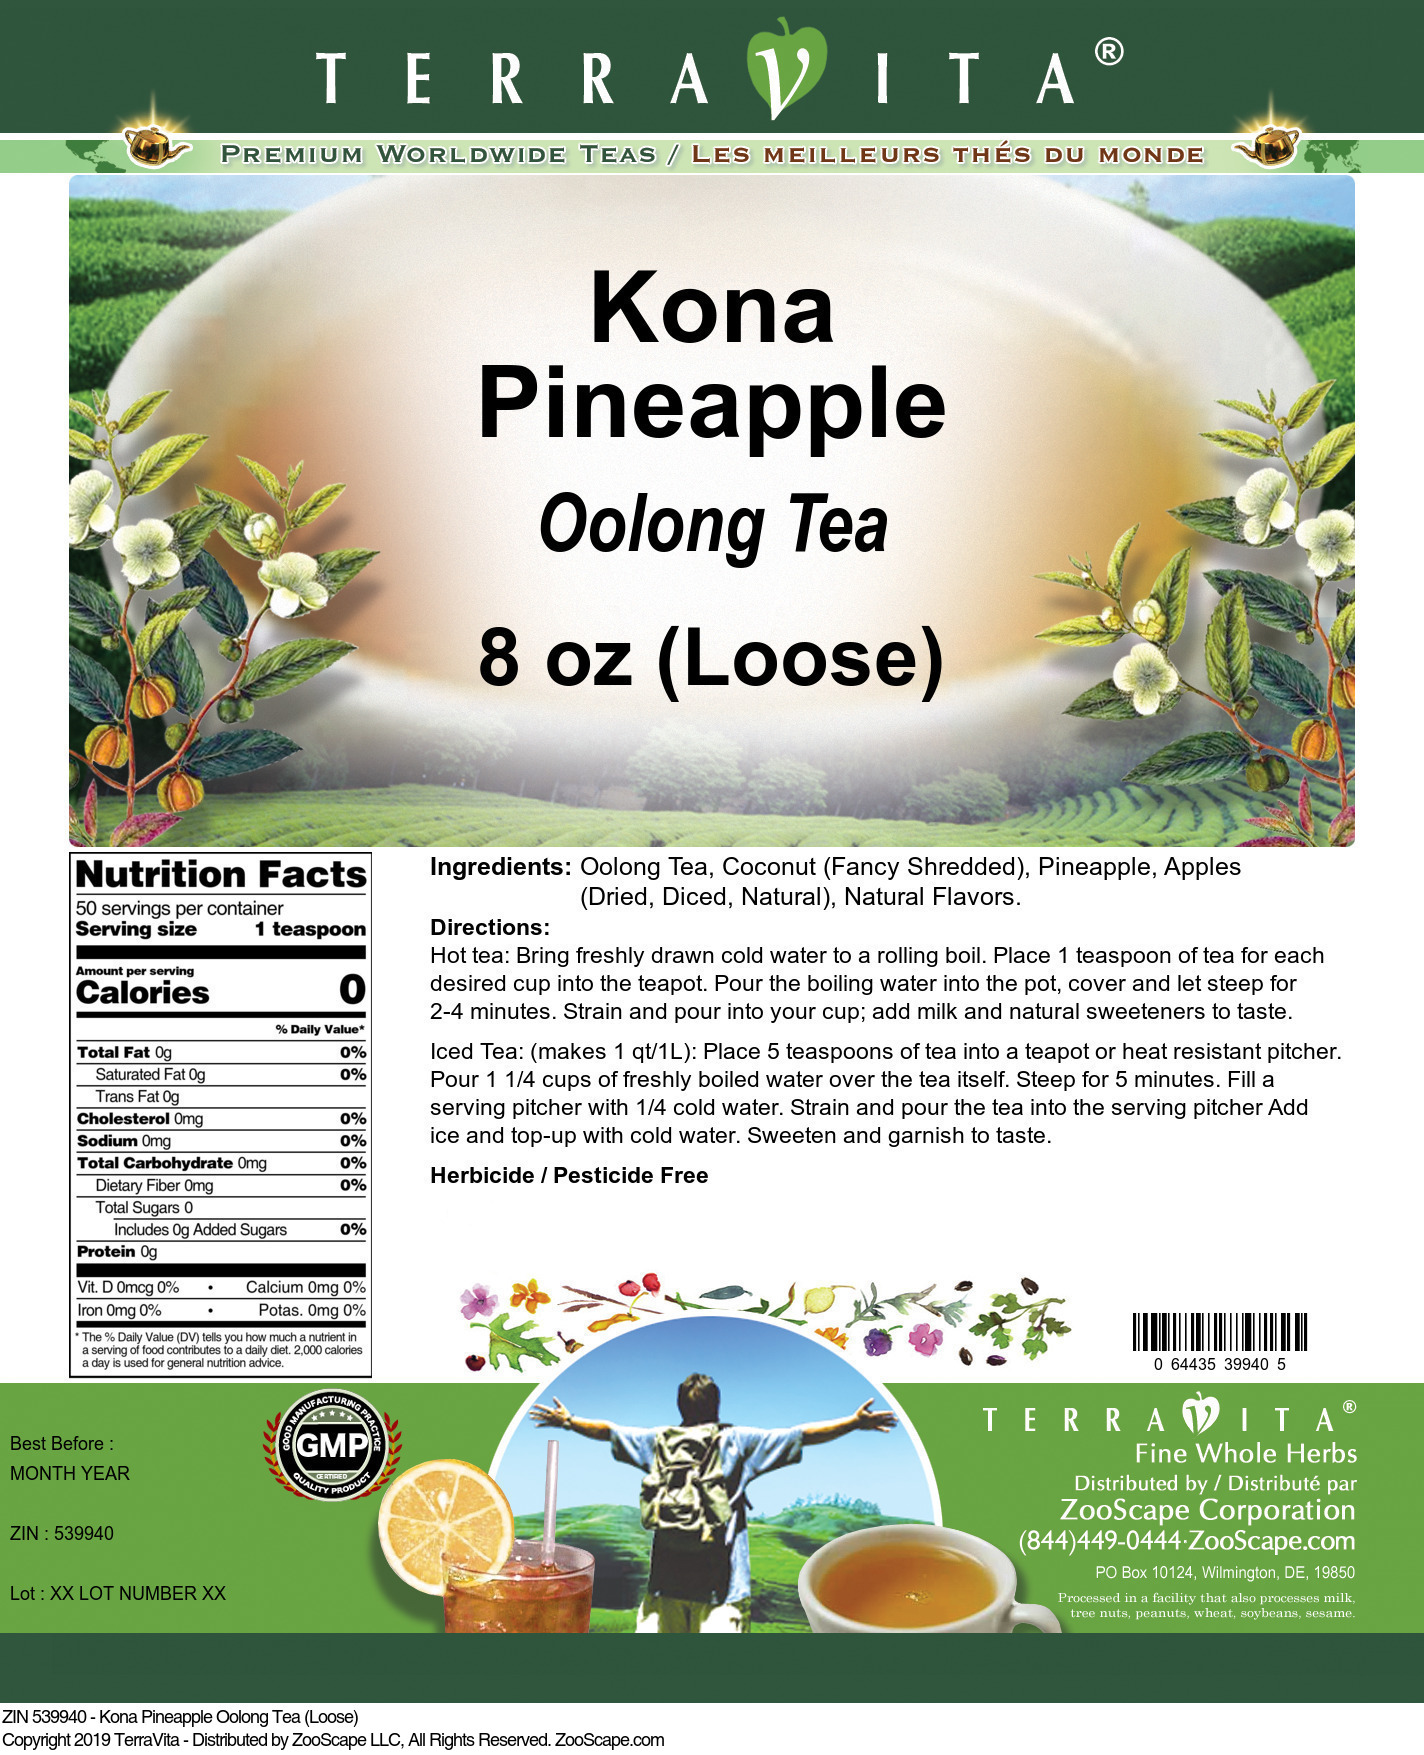 Kona Pineapple Oolong Tea (Loose) - Label